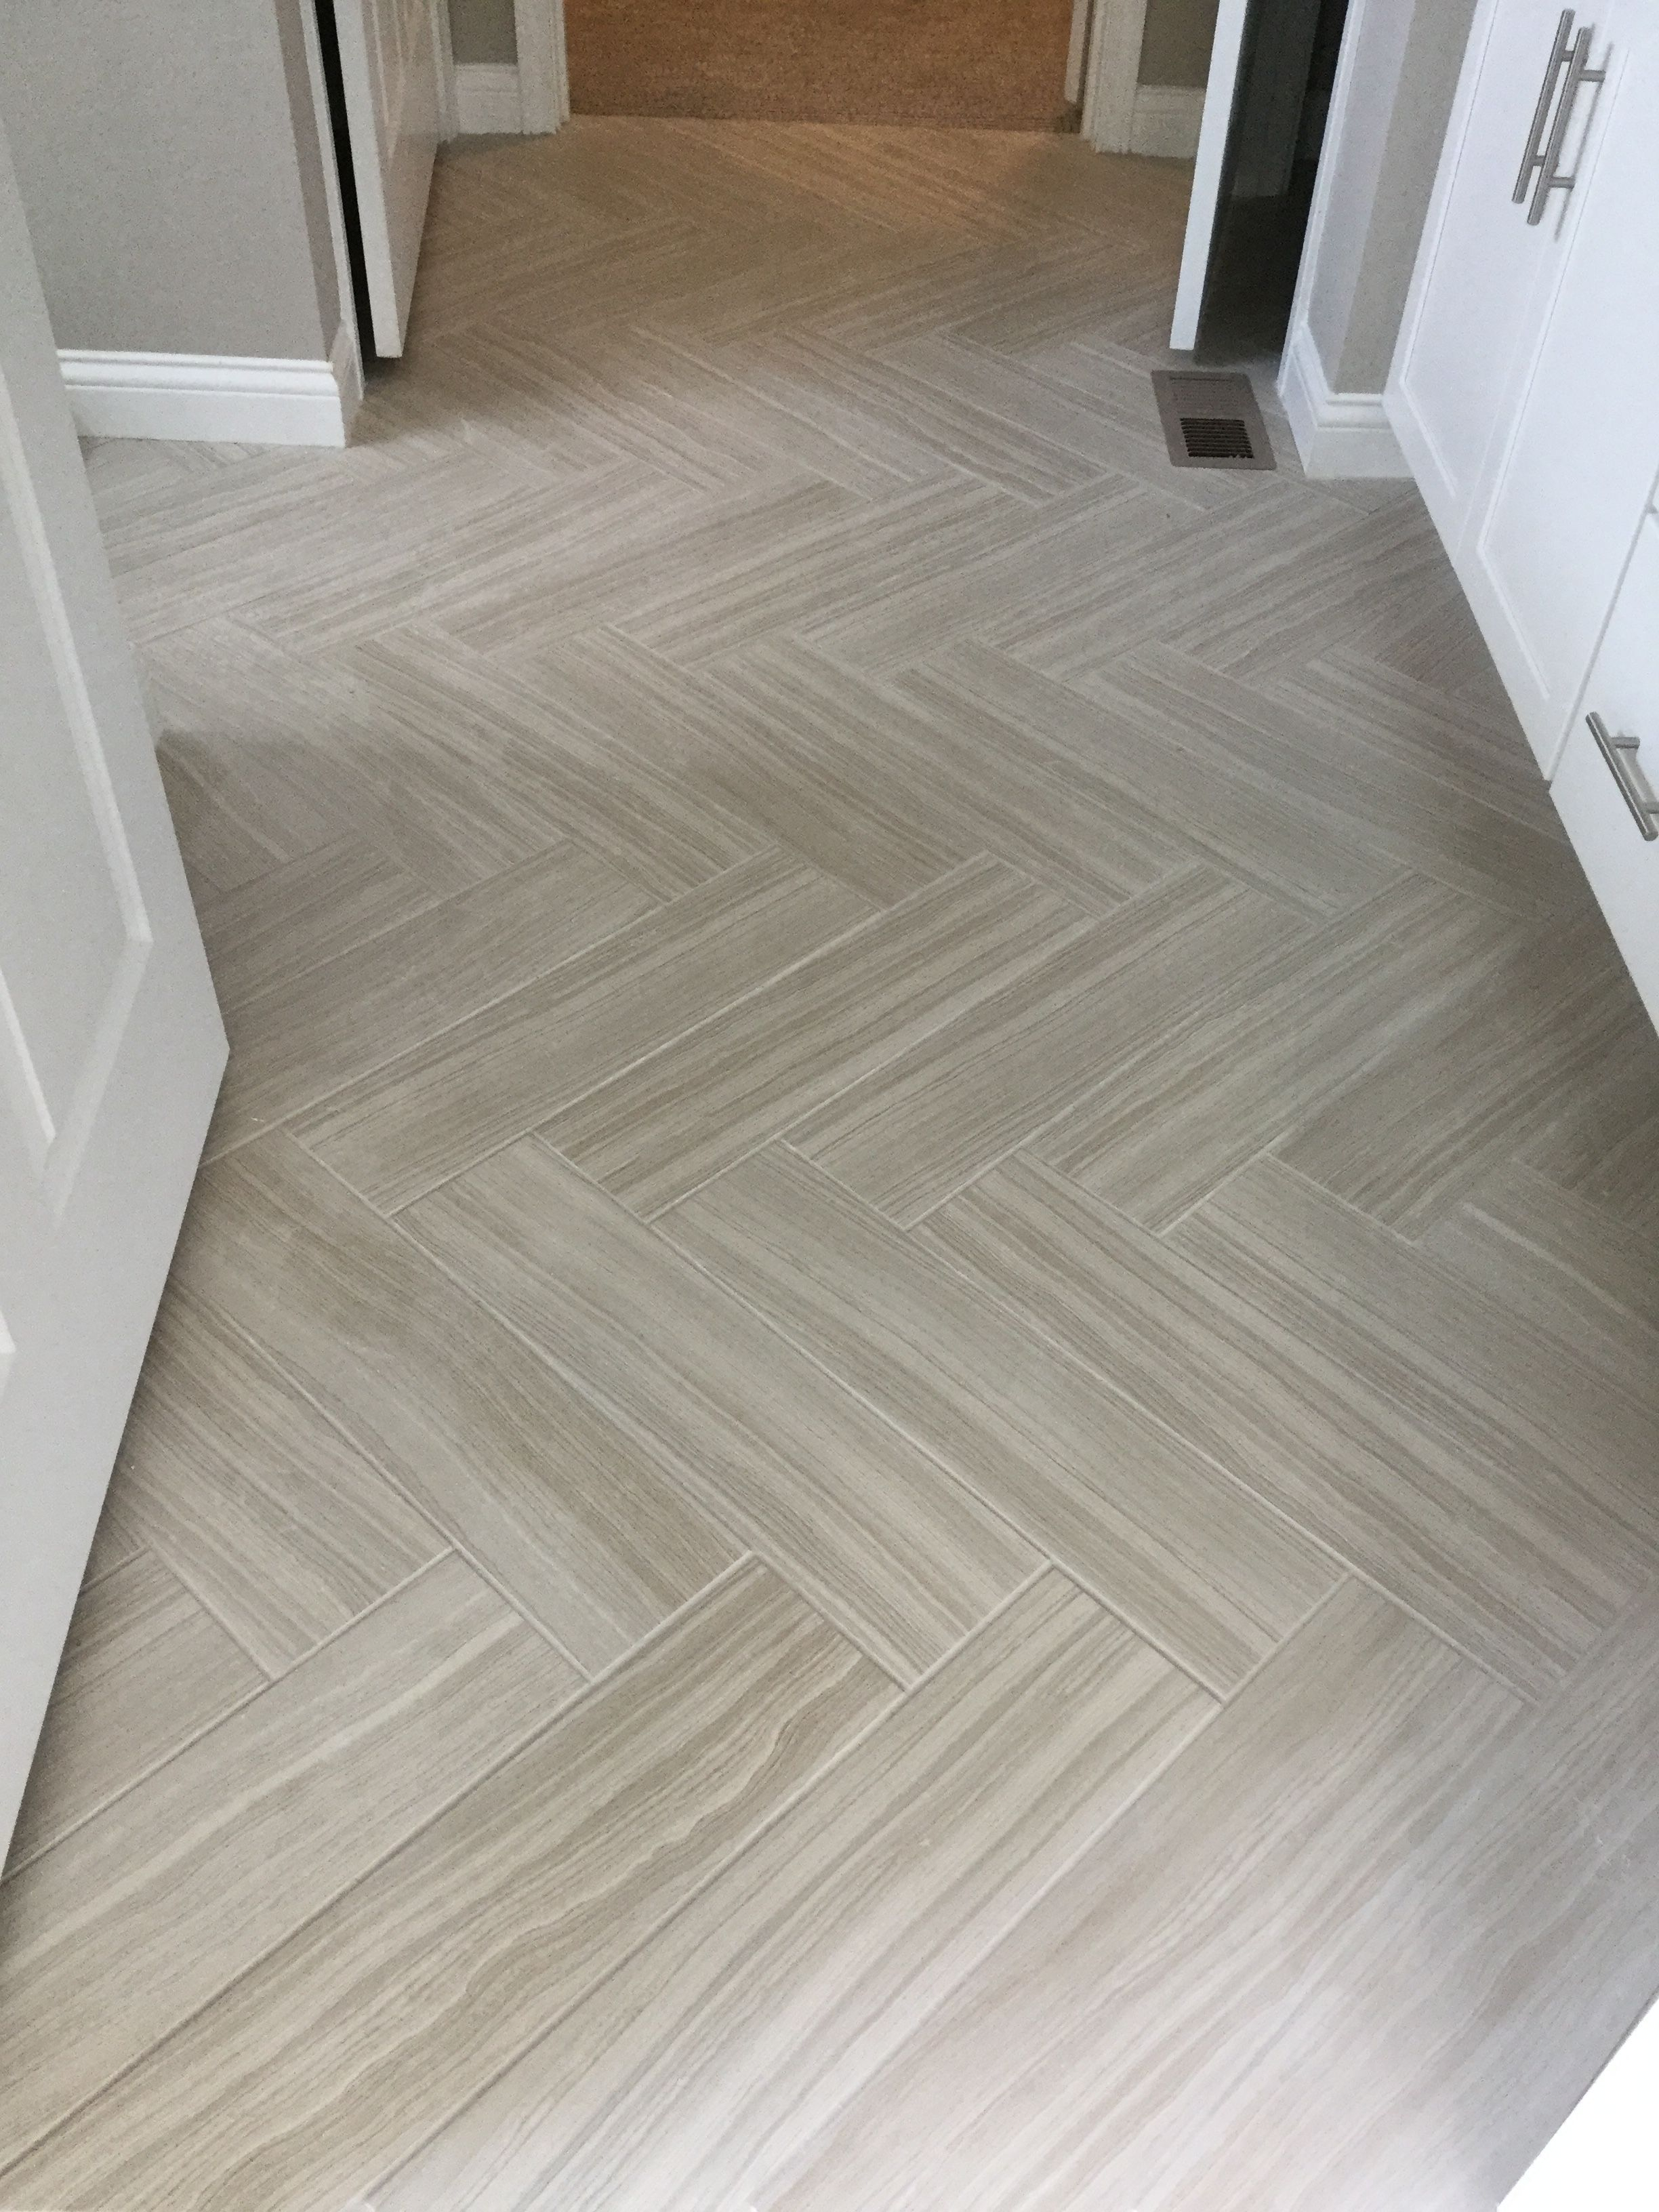 Santino Bianco 6x24 Tiles In Herringbone Pattern On Floor Of in proportions 2448 X 3264